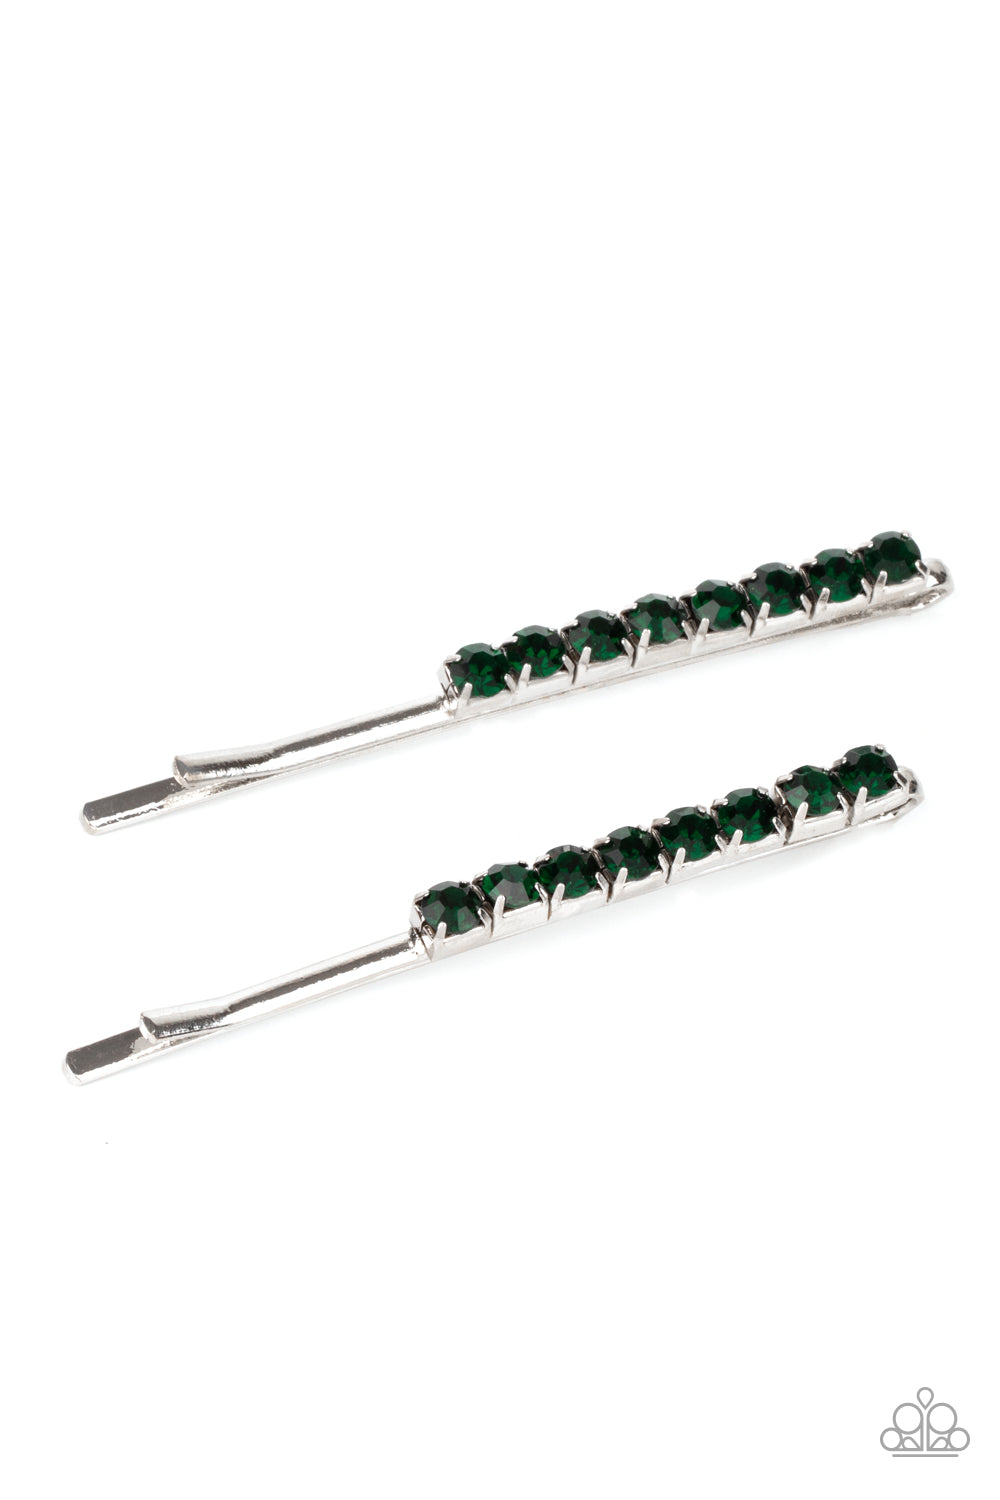 Satisfactory Sparkle - Green (Rhinestone) Bobby/Hair  Pins